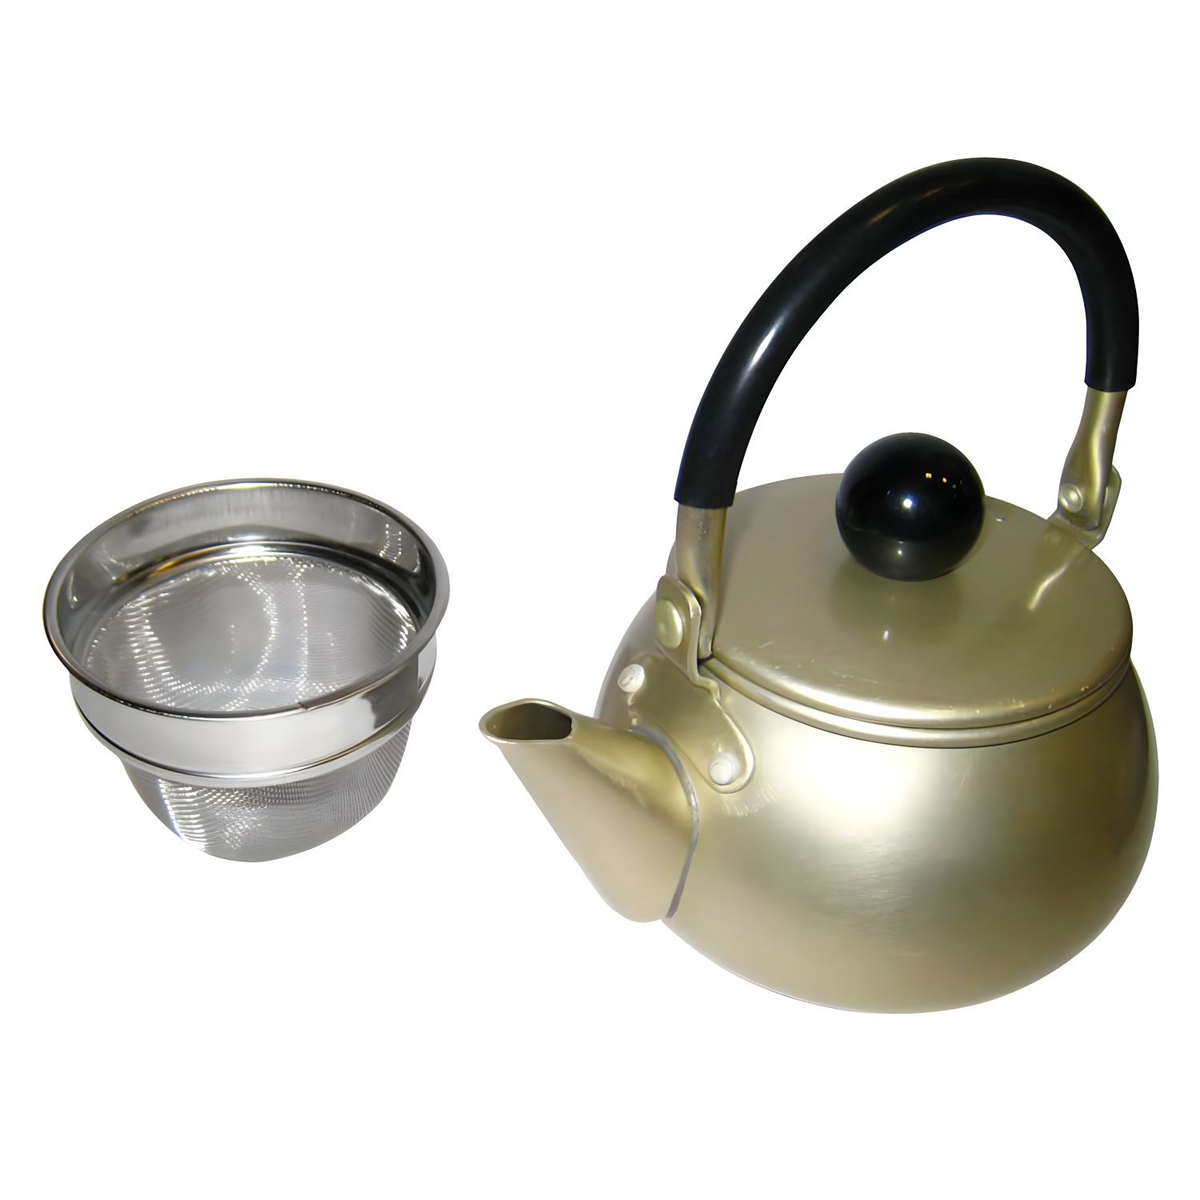 Maekawa Kinzoku Aluminum Kyusu Teapot with Tea Strainer